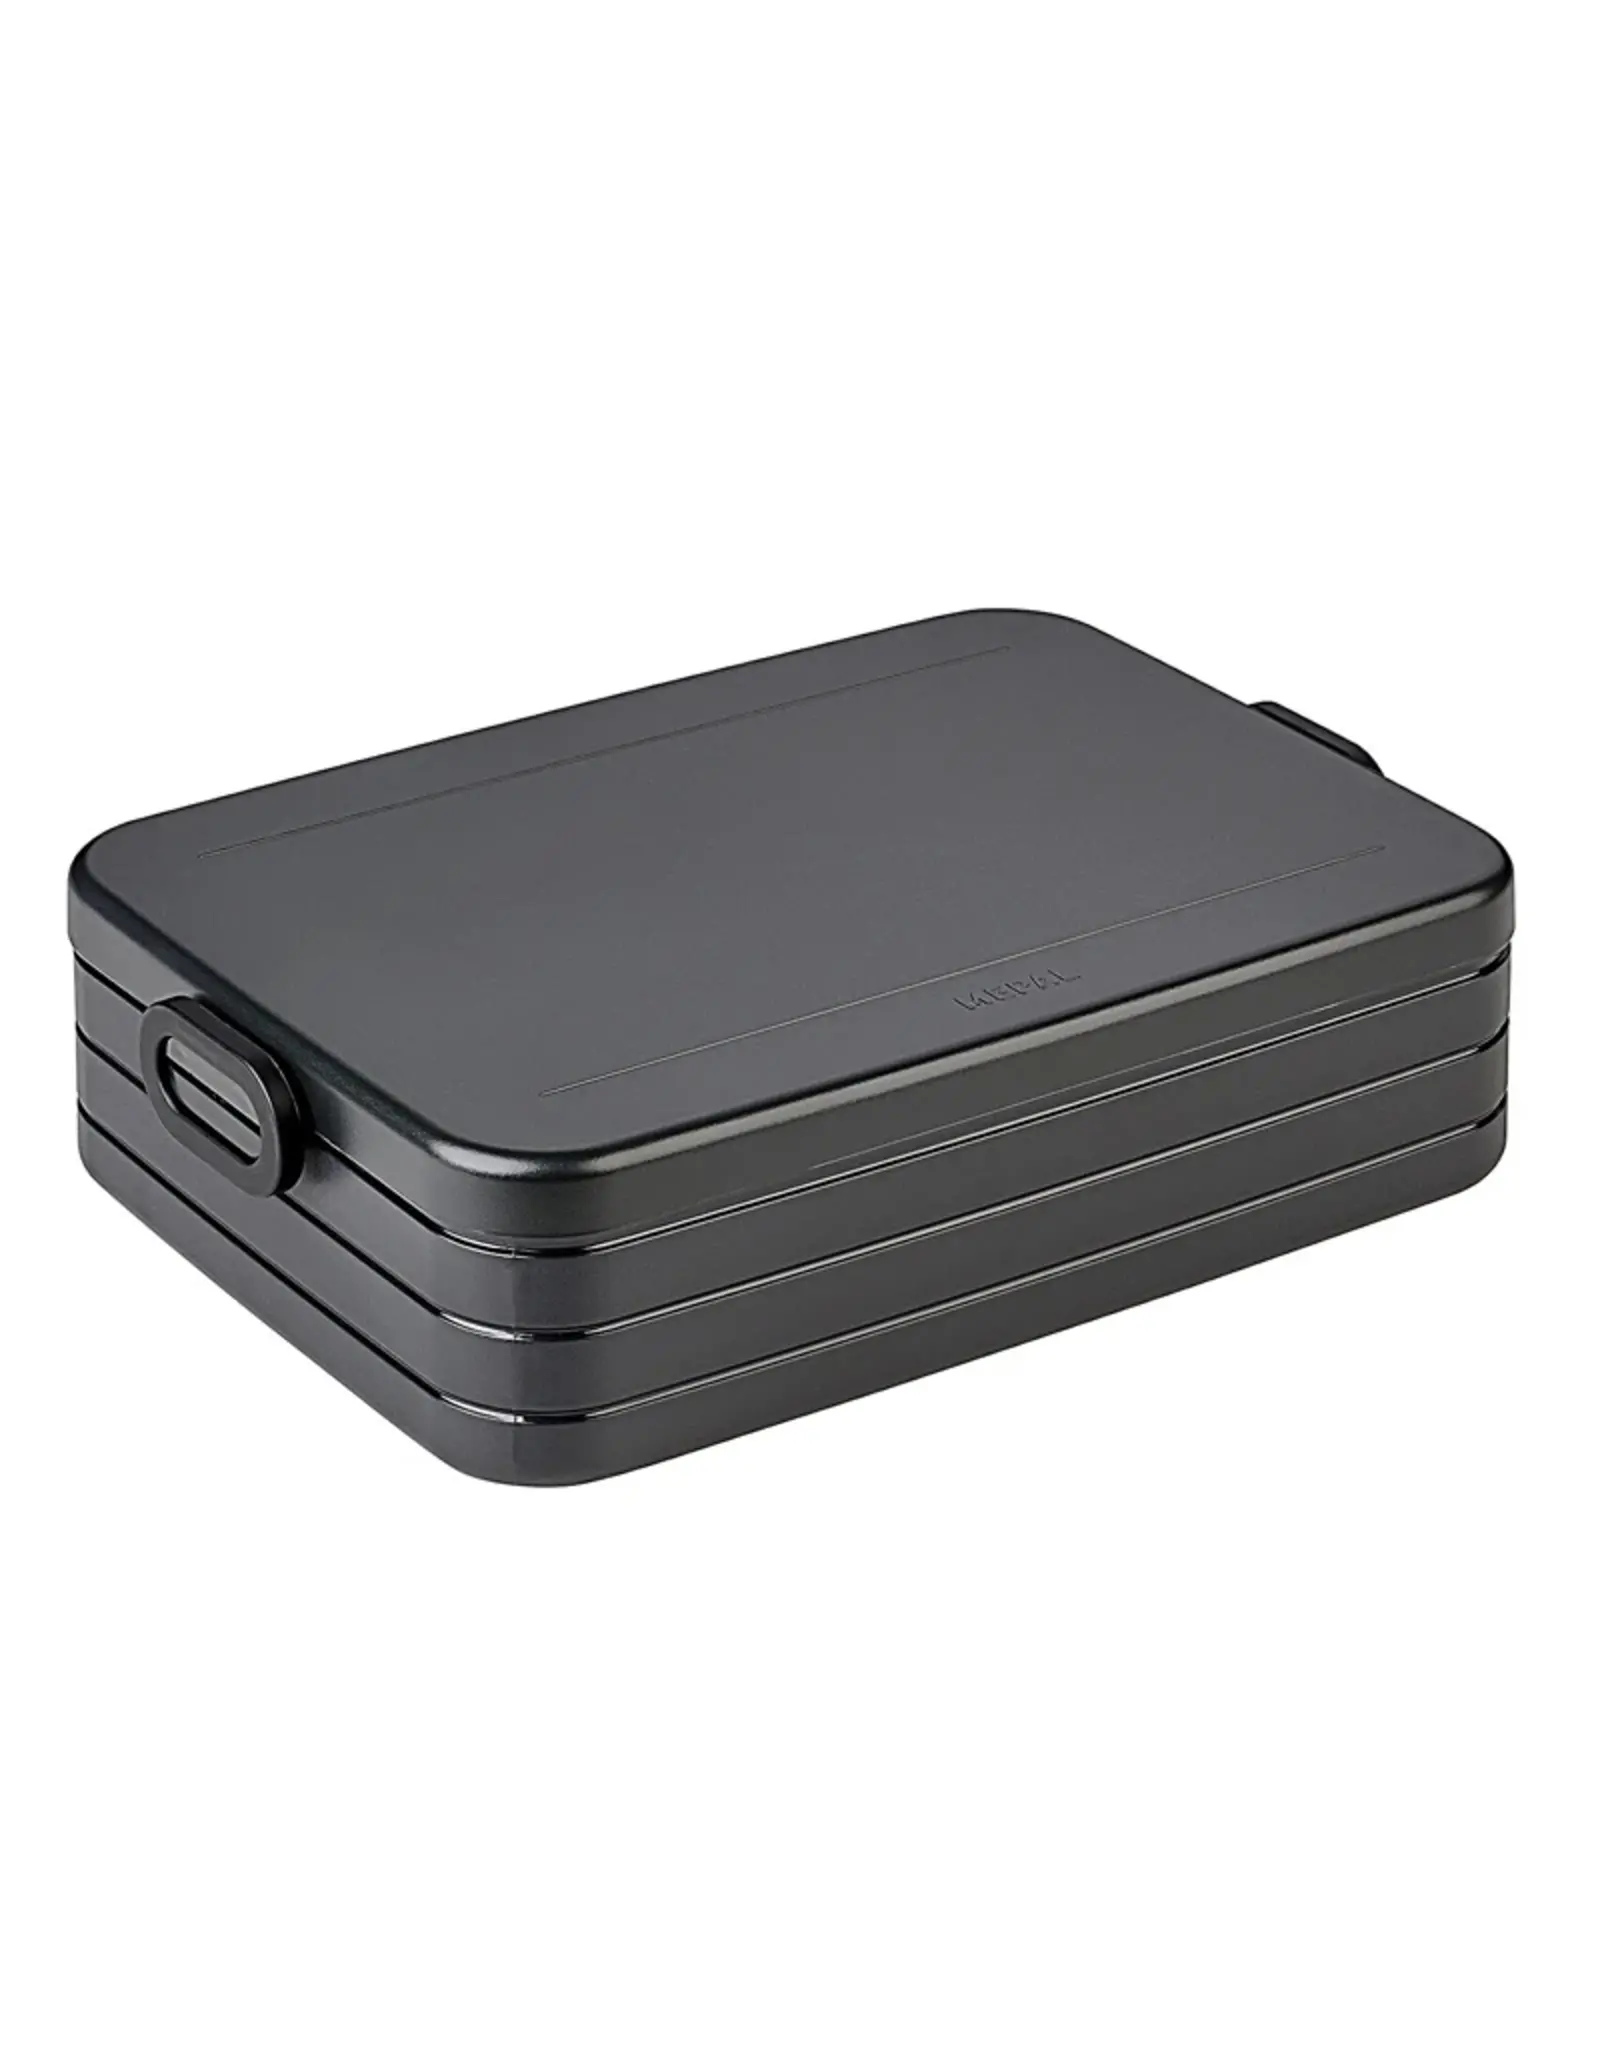 Mepal Bento lunchbox take a break LARGE - Nordic Black